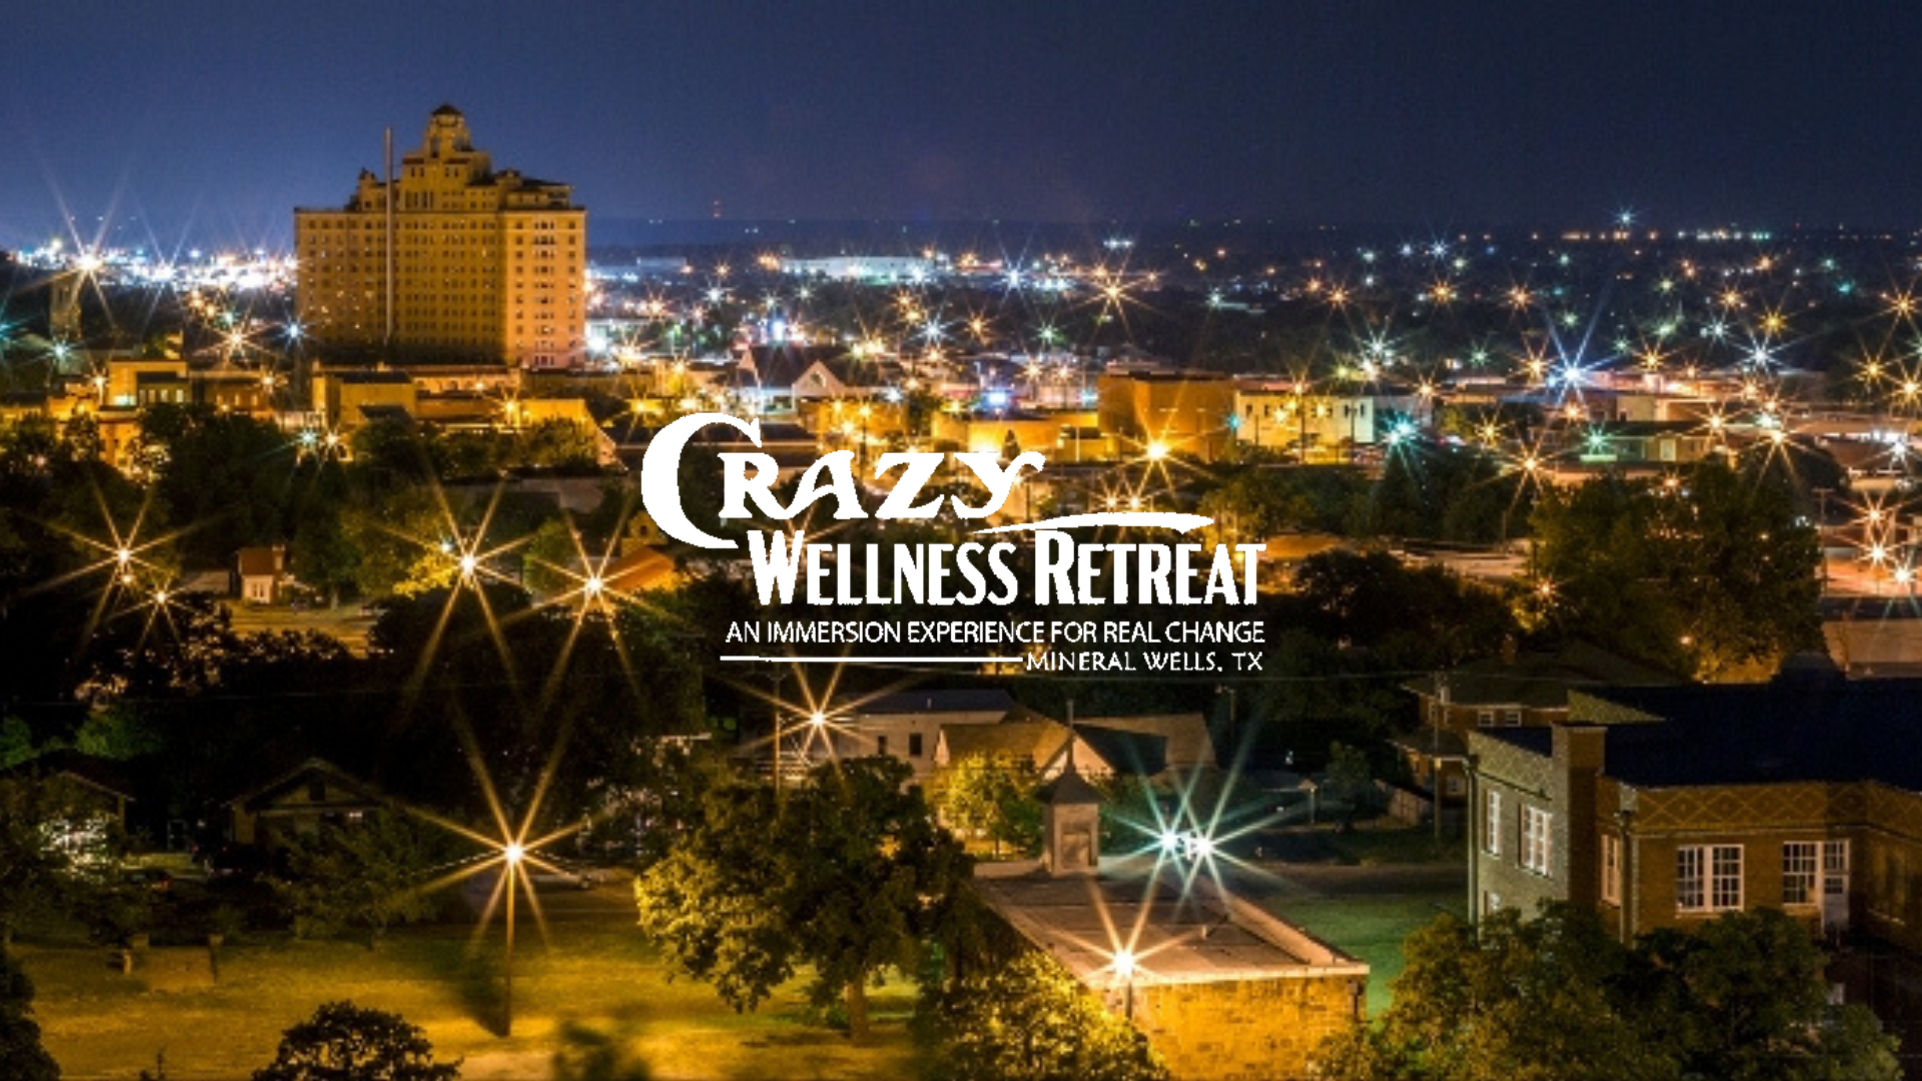 Crazy Wellness Retreats - A Holistic Immersion Weekend